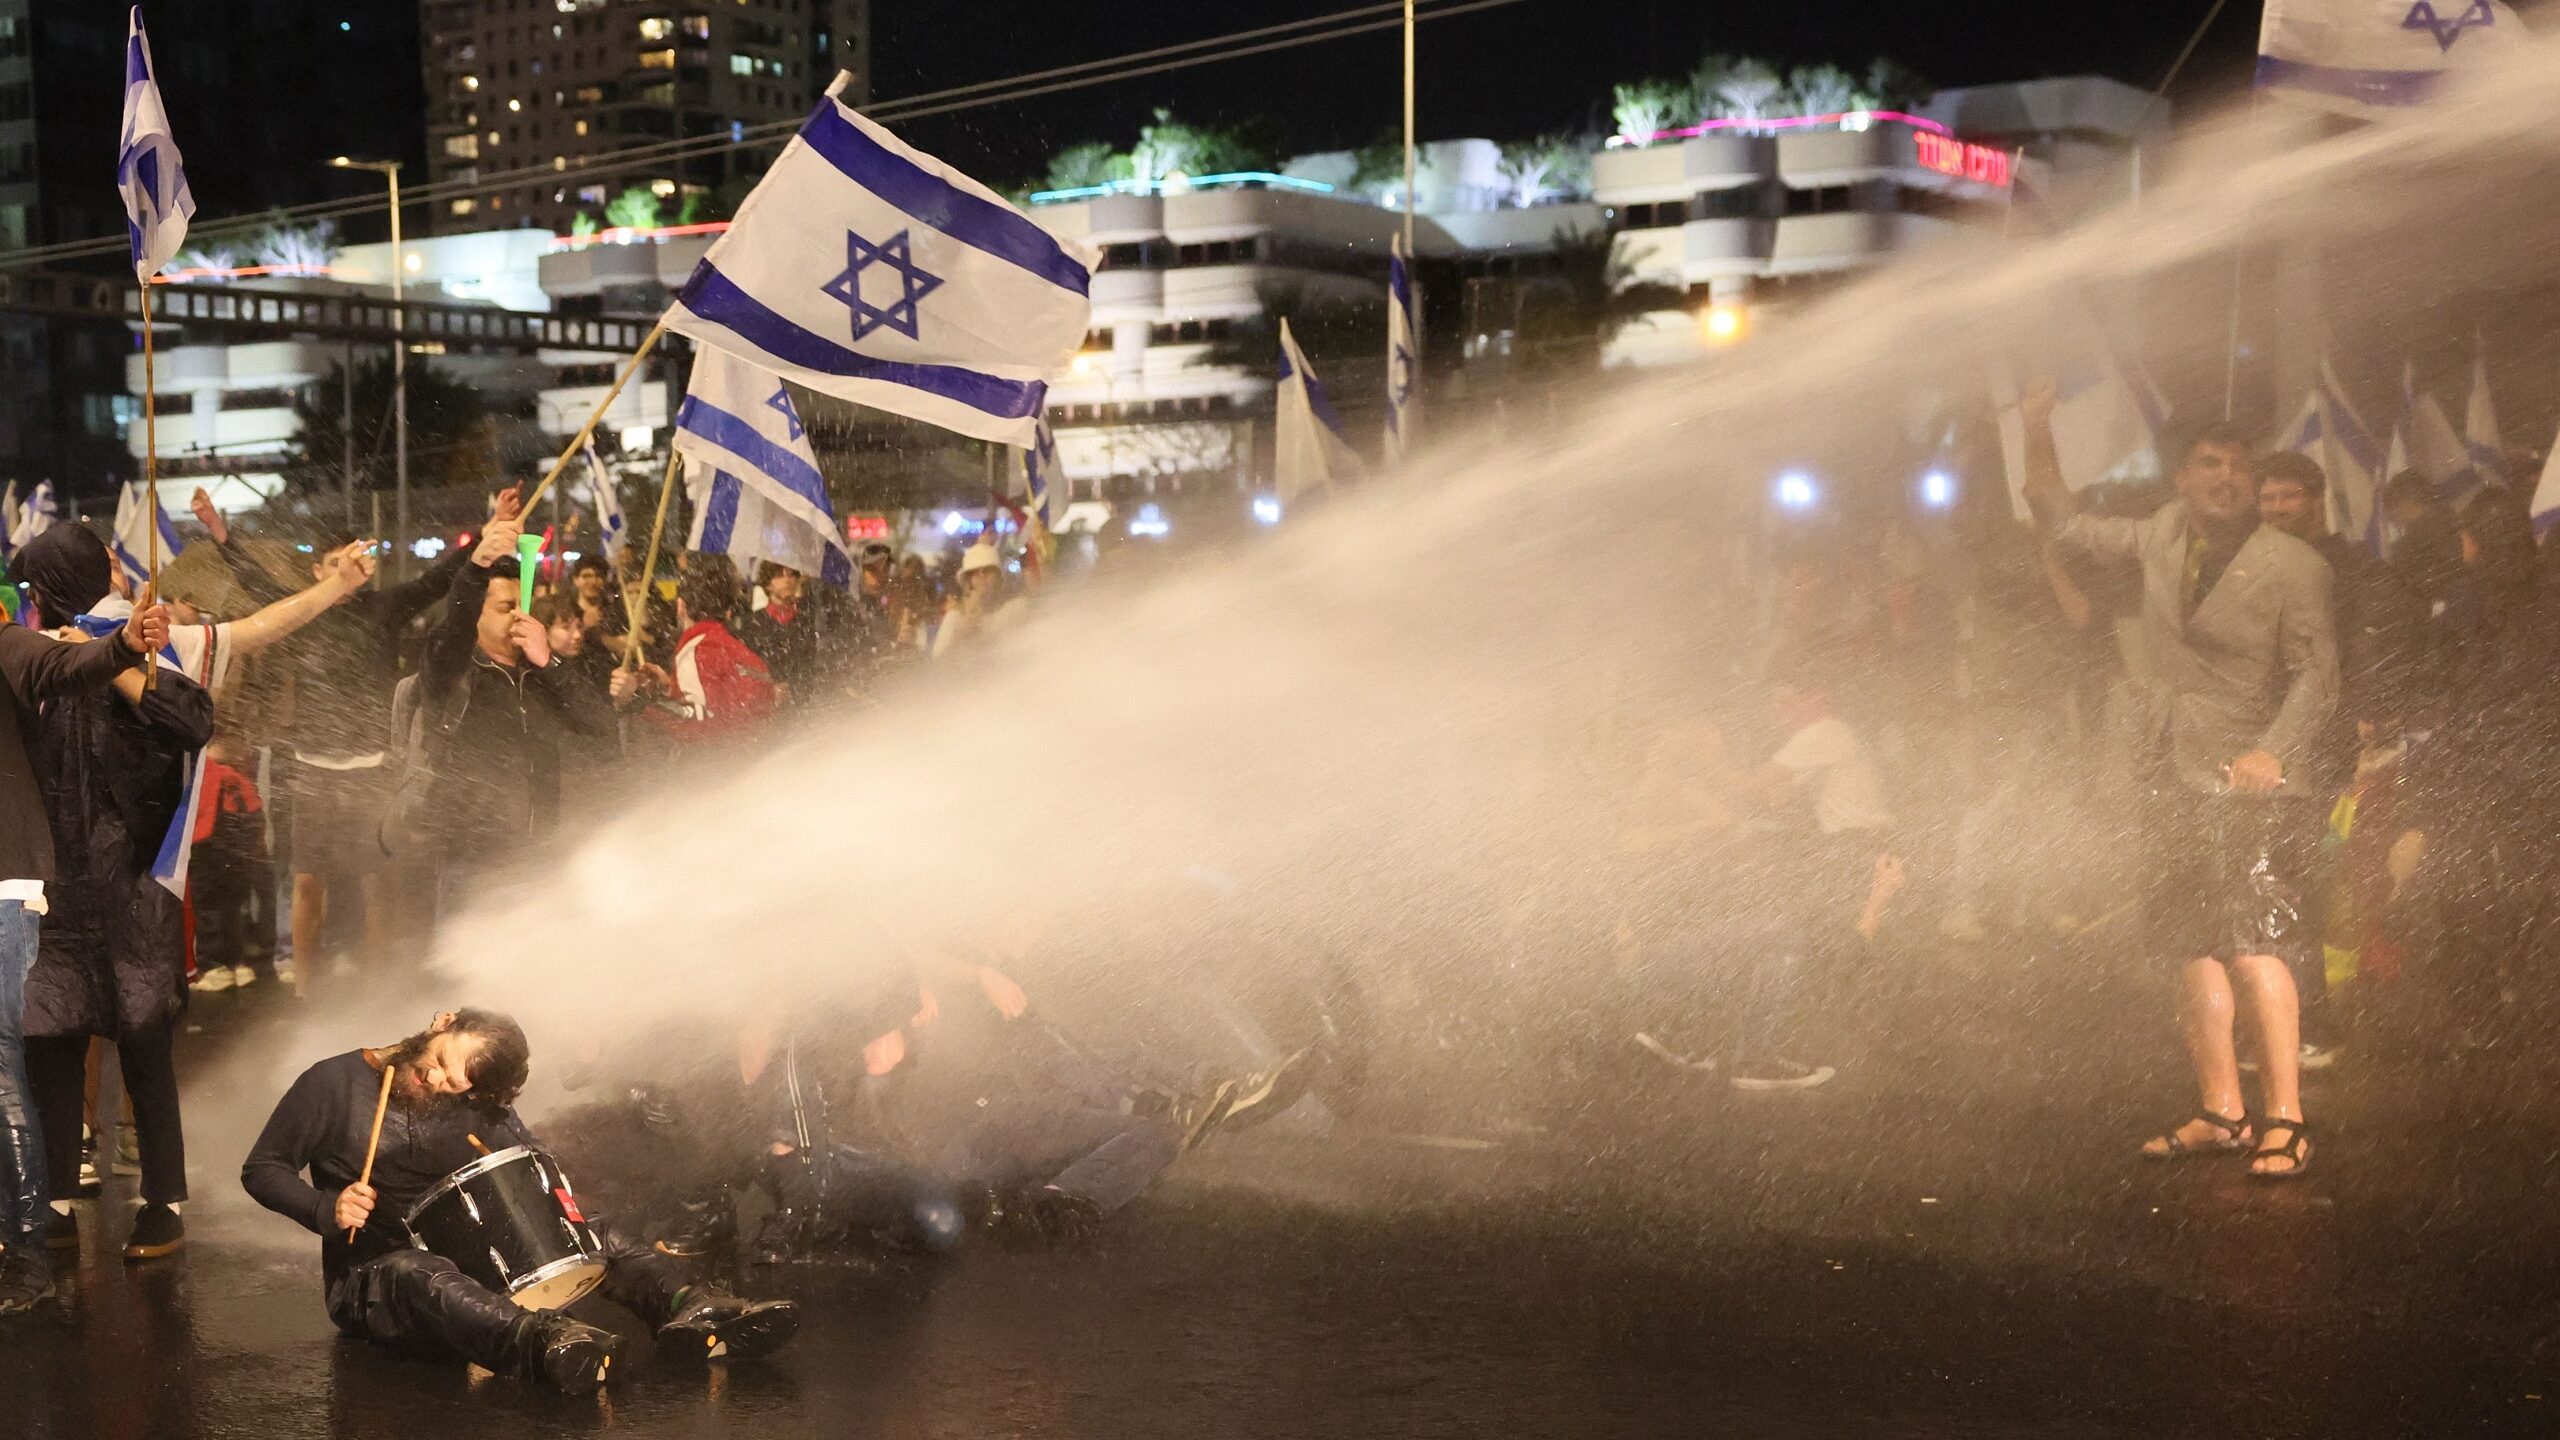 Israel Police Officer Questioned Over Violence at Tel Aviv Protest